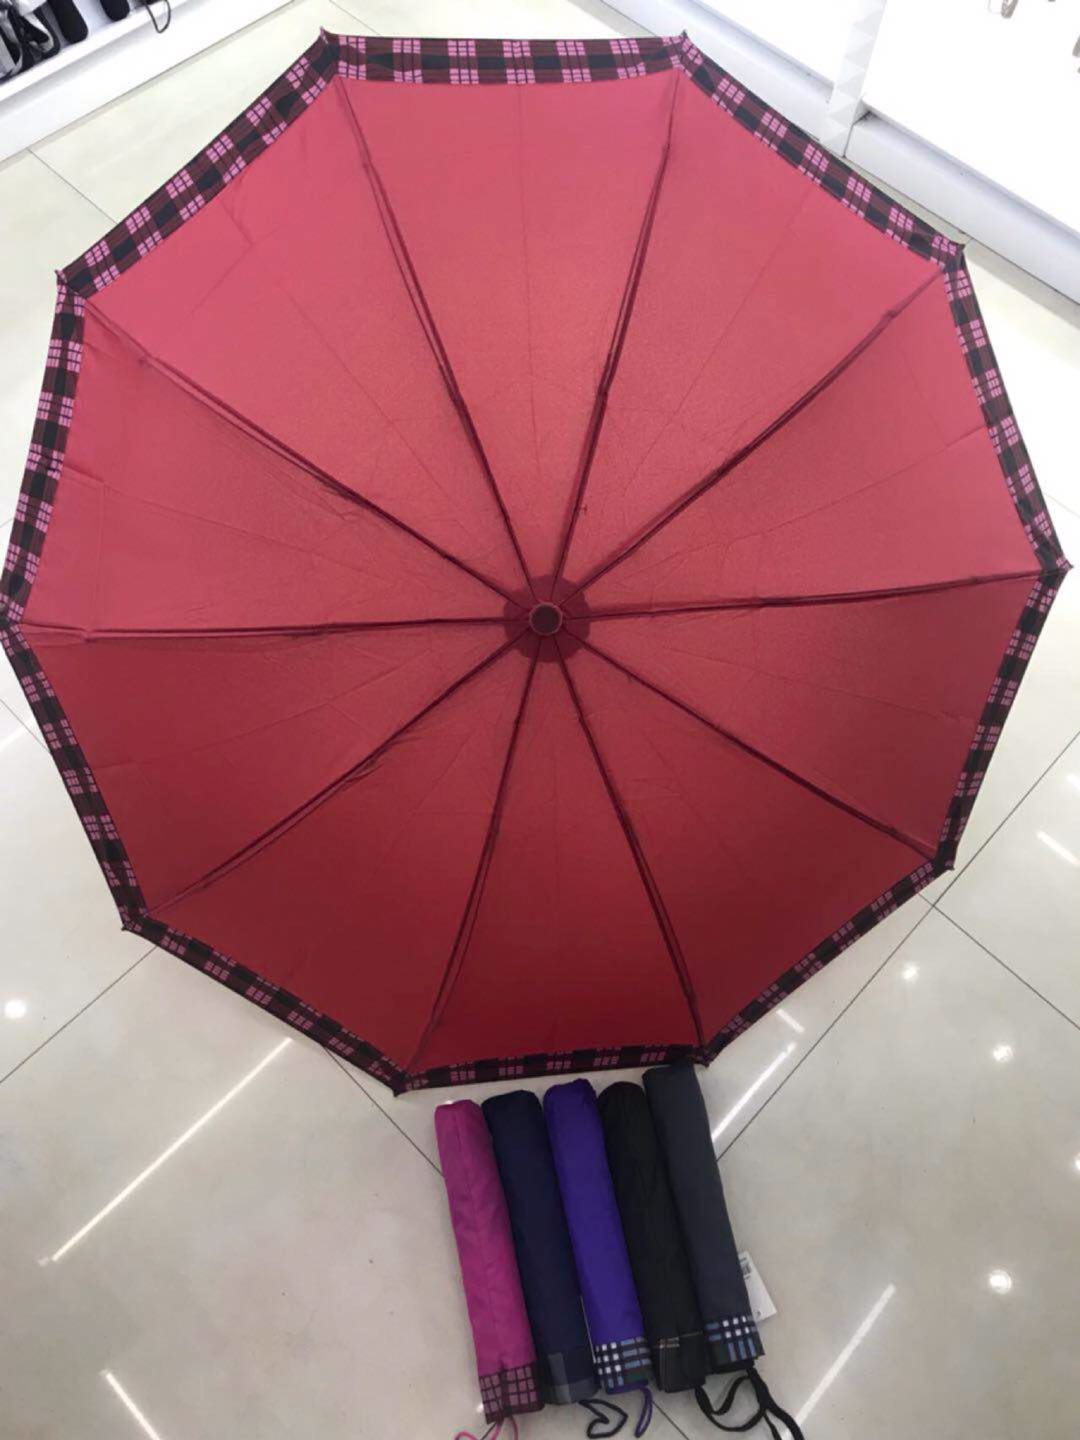 75#10K素色格子接边粗杆三折折叠伞双人超大晴雨伞商务礼品伞